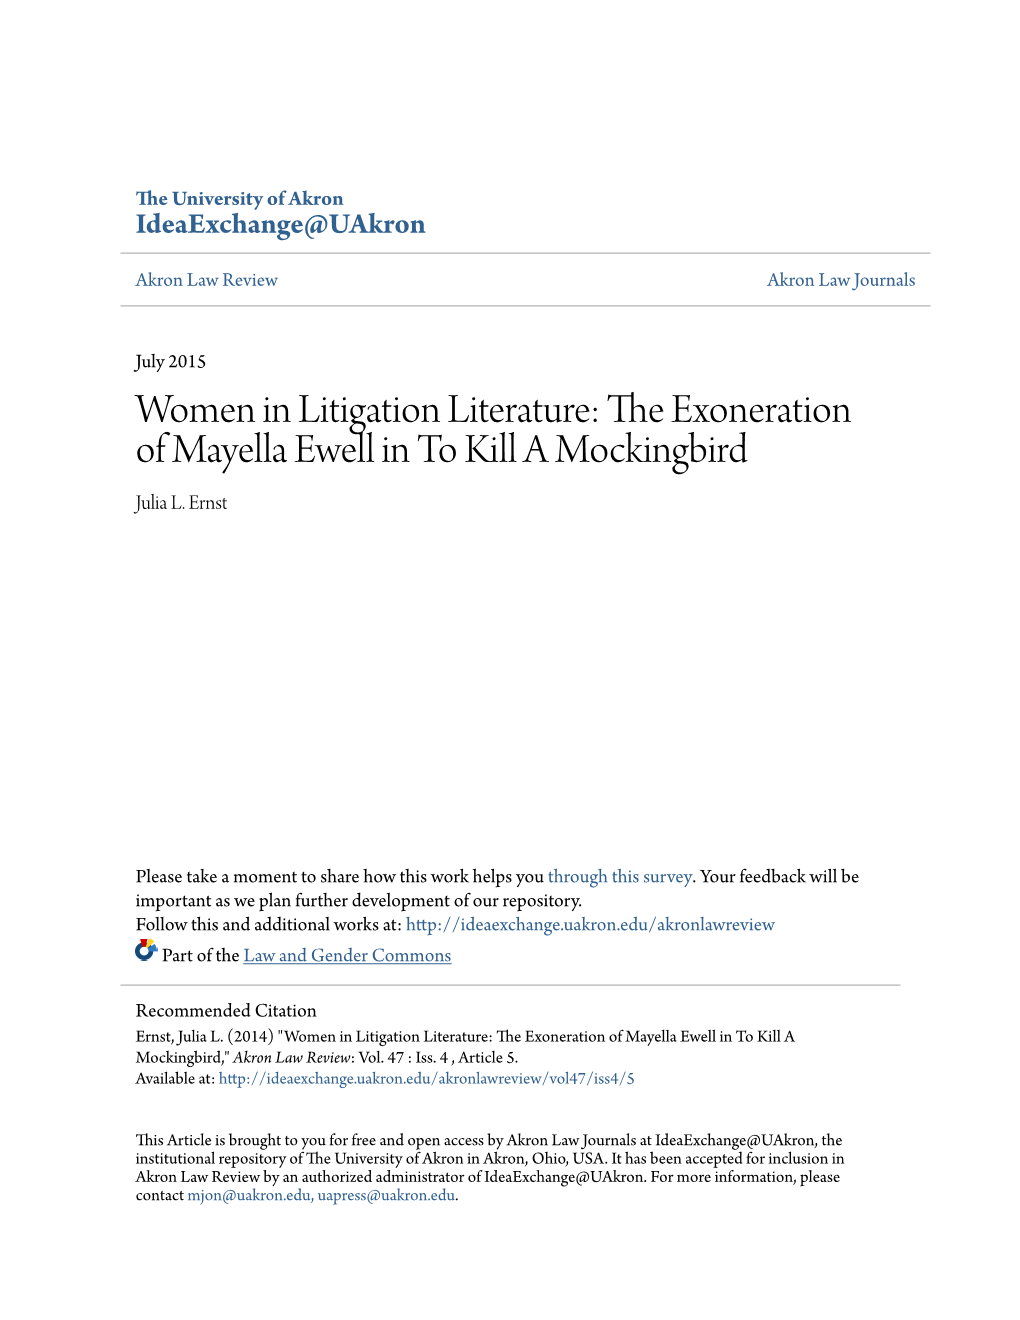 The Exoneration of Mayella Ewell in to Kill a Mockingbird Julia L